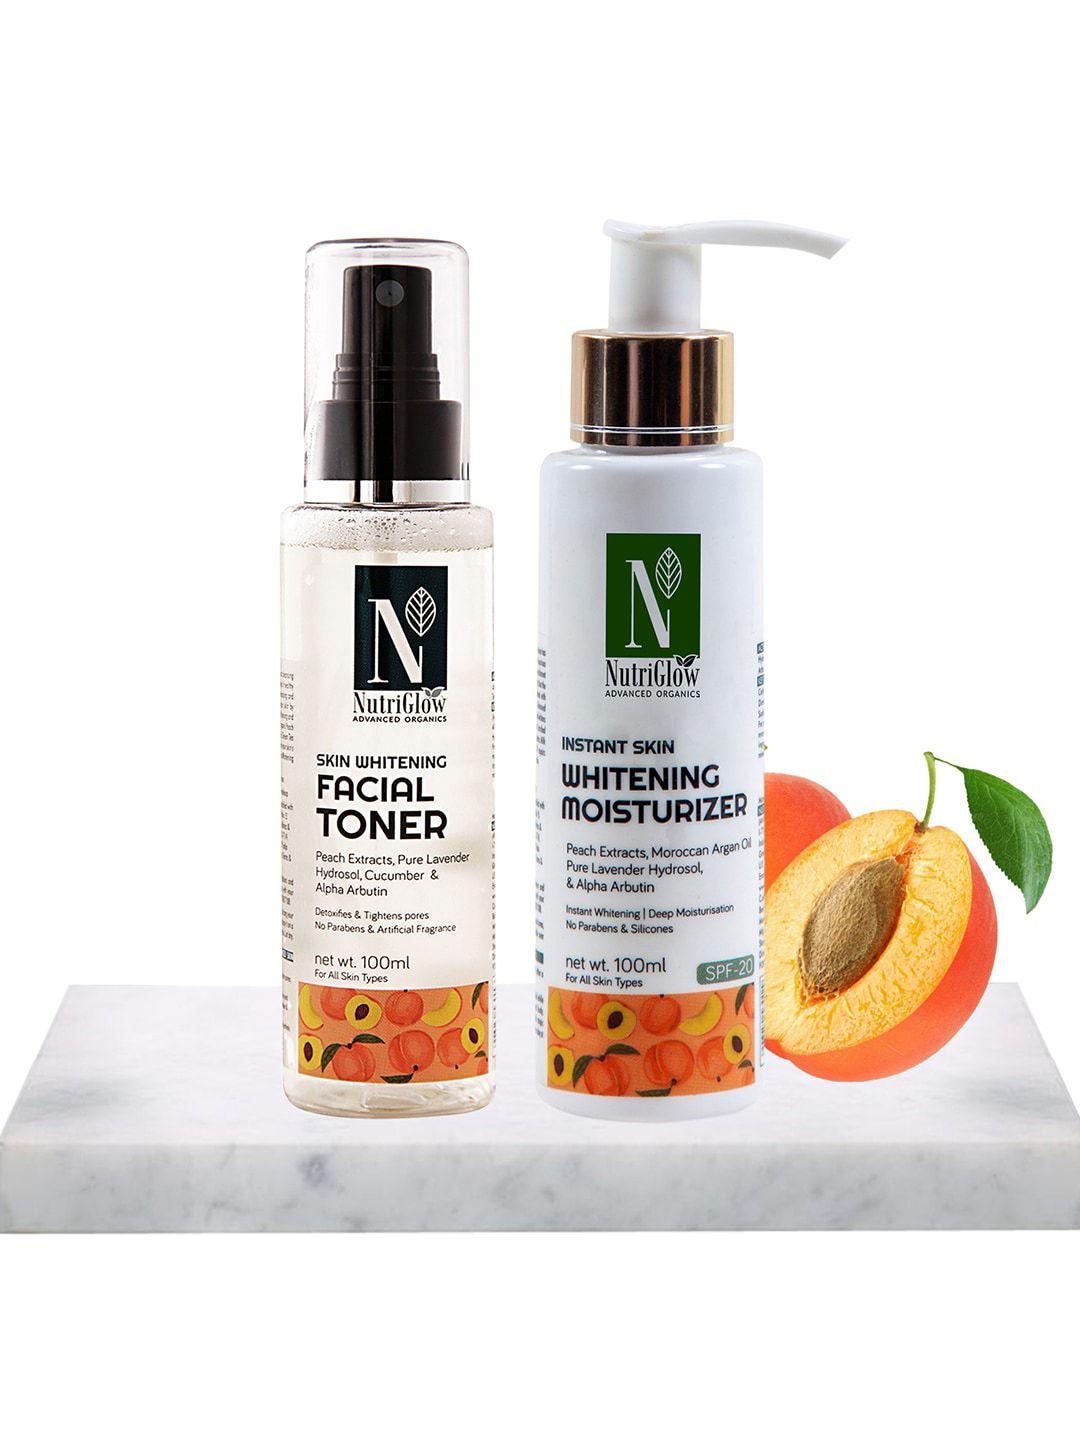 nutriglow advanced organics skin whitening facial toner & moisturizer spf 20 100ml each